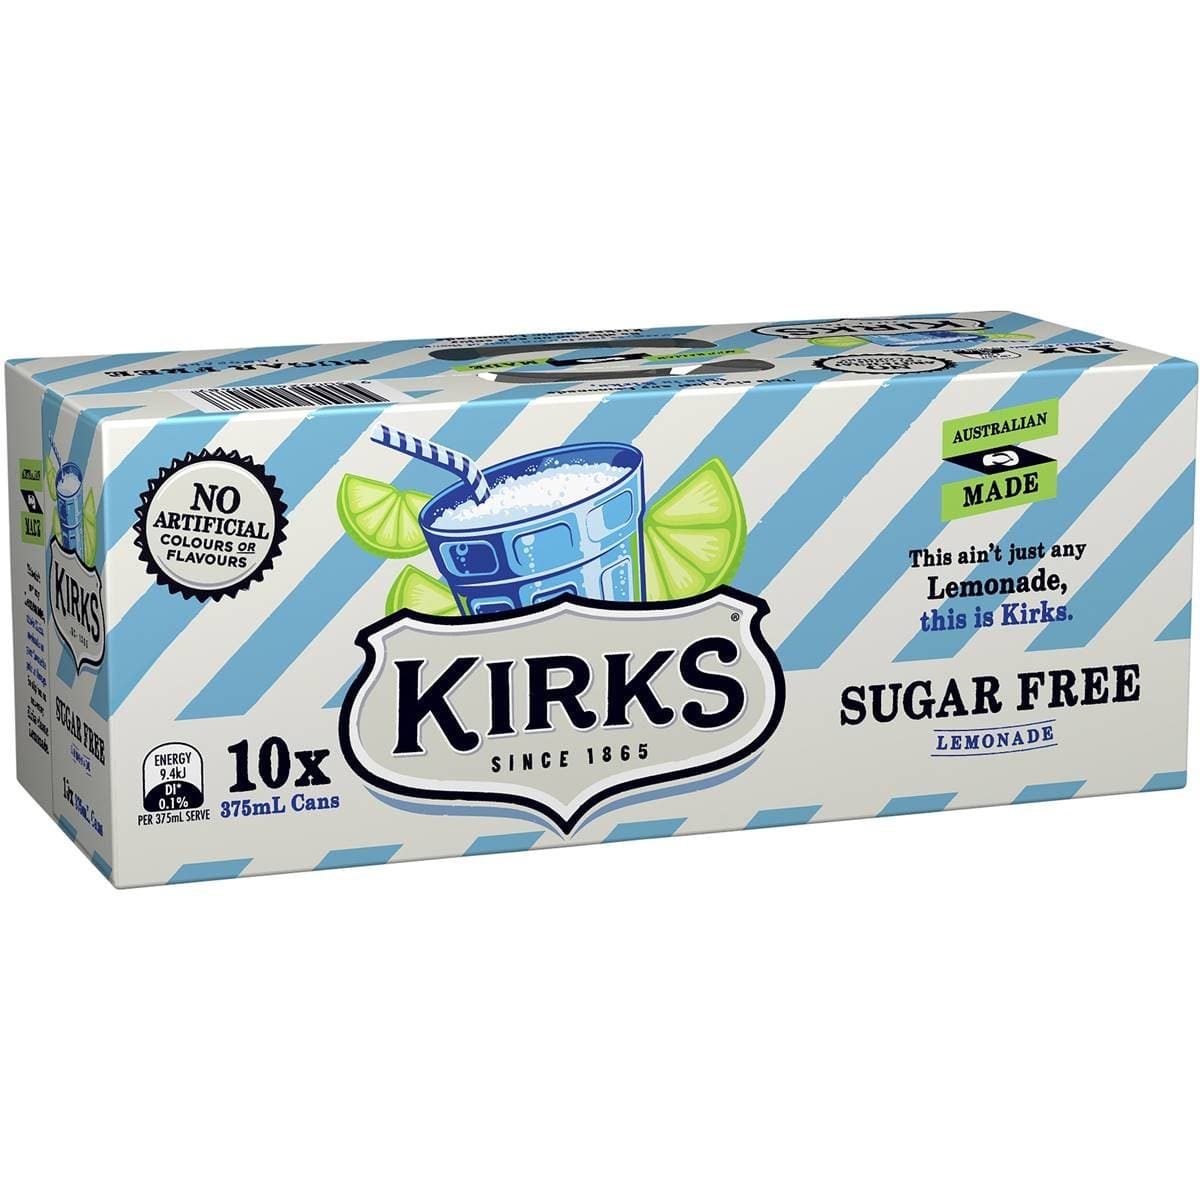 Kirks Lemonade Sugar Free10x375ml